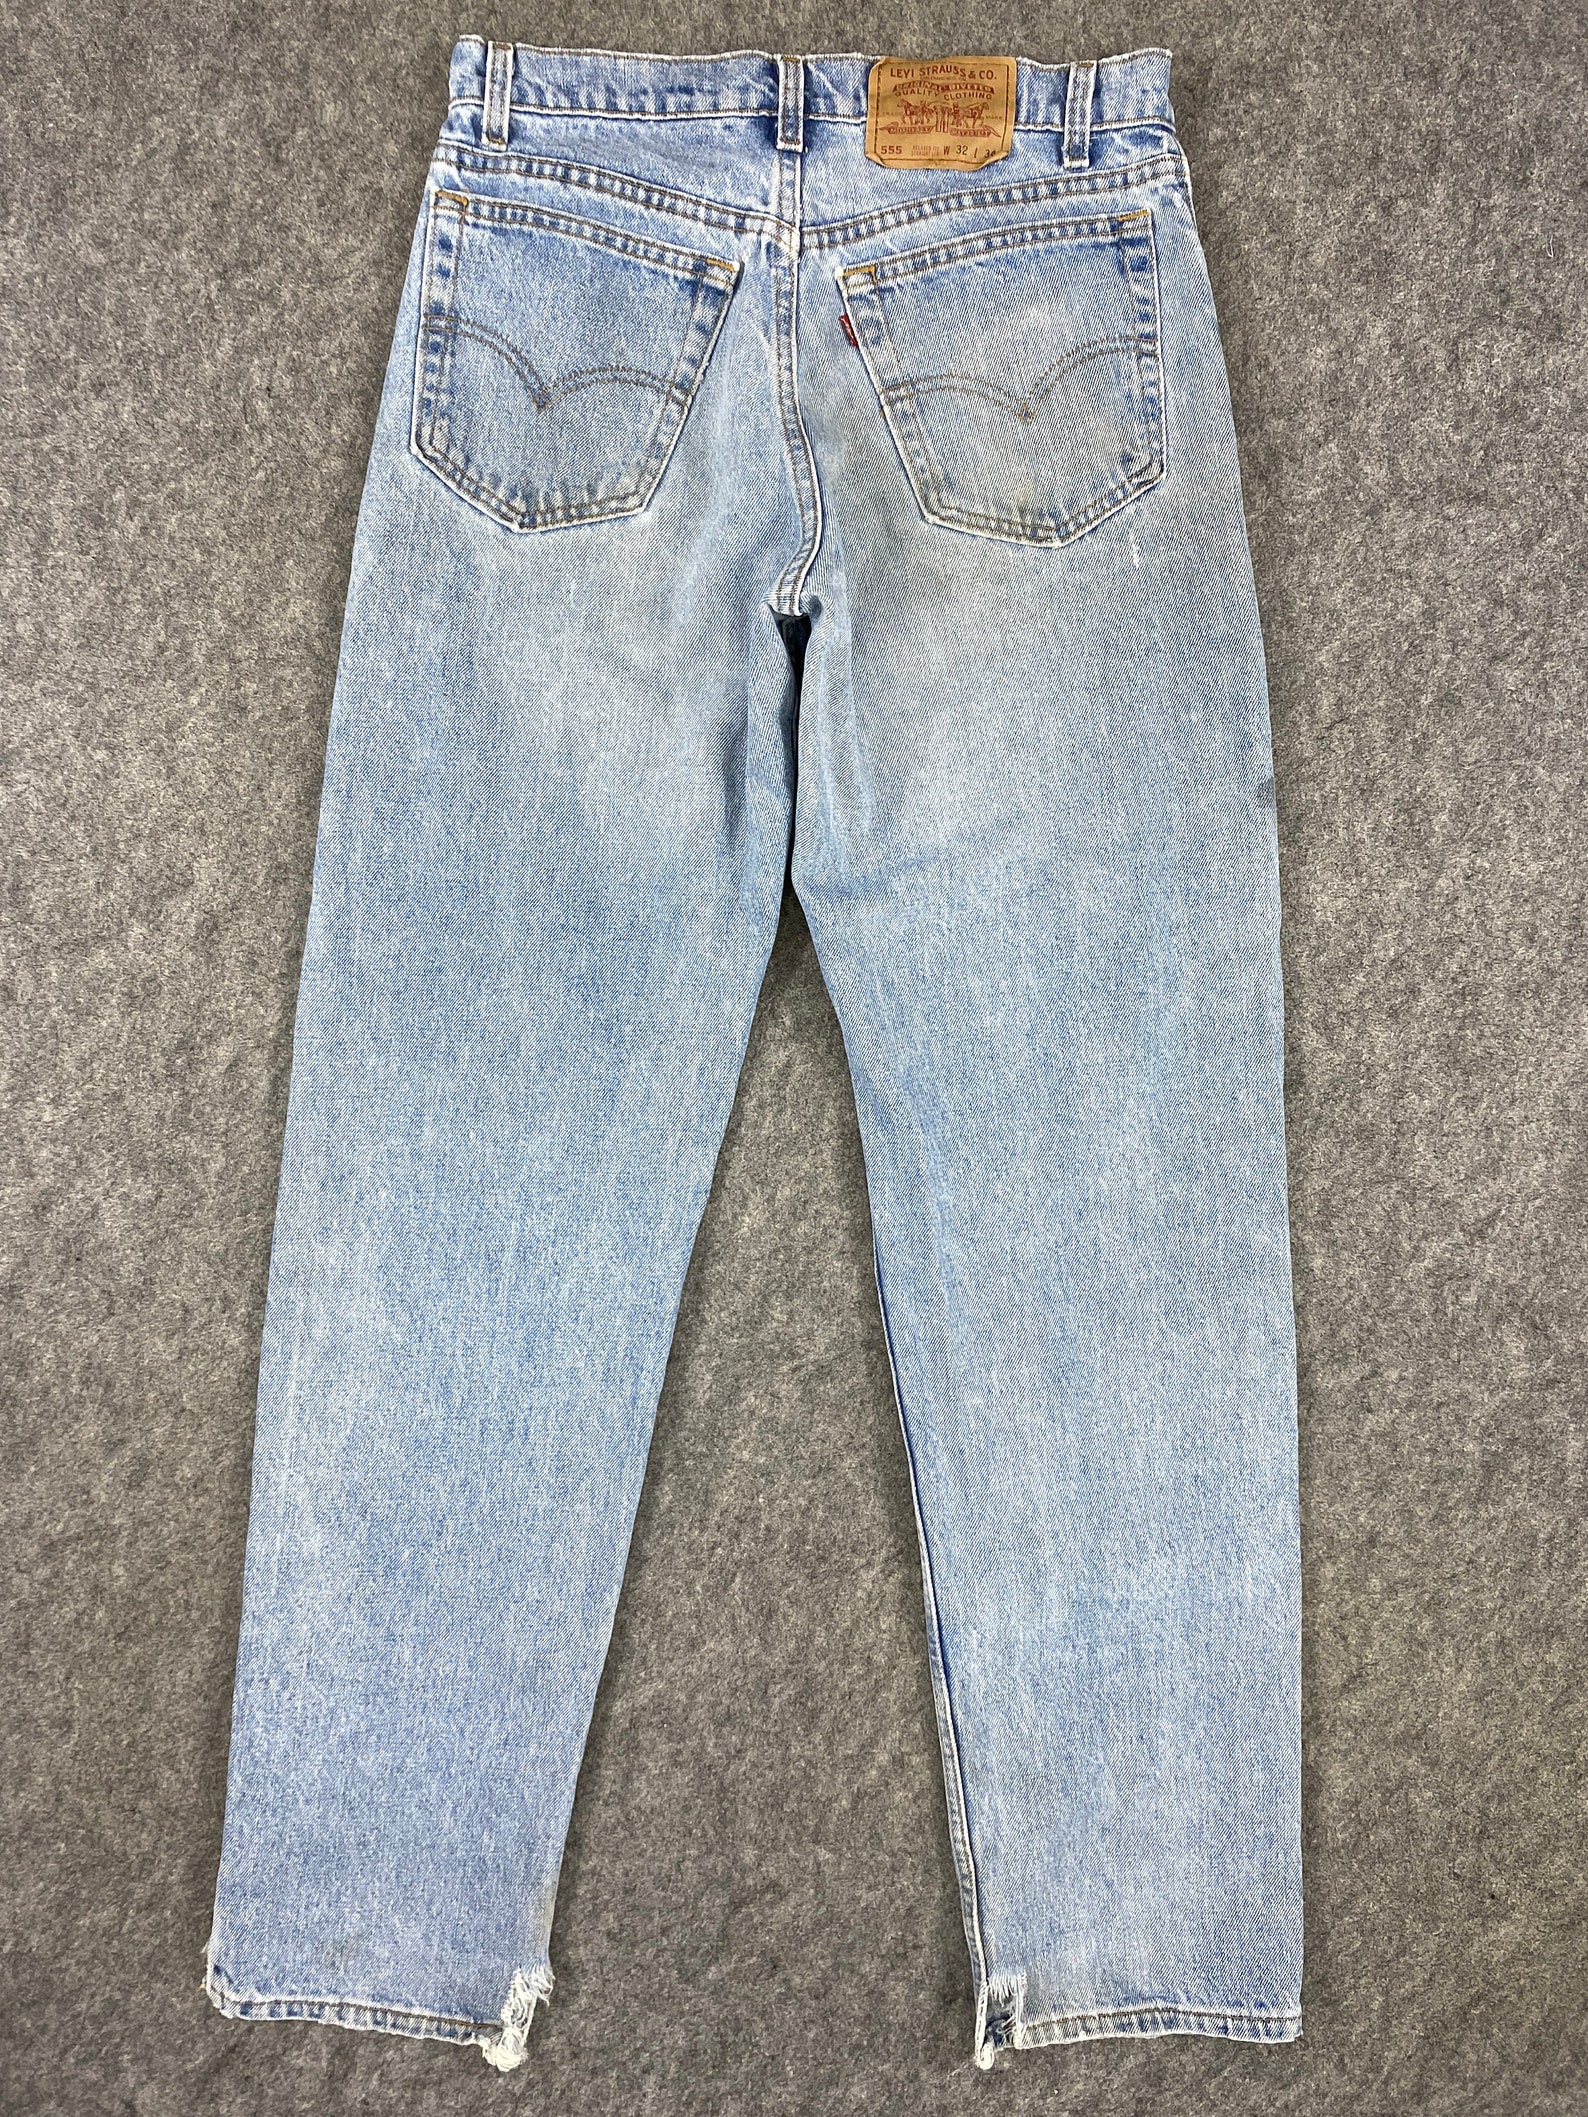 Vintage Levi's 555 Jeans 31x34 Blue Wash Denim Red Tab | Etsy